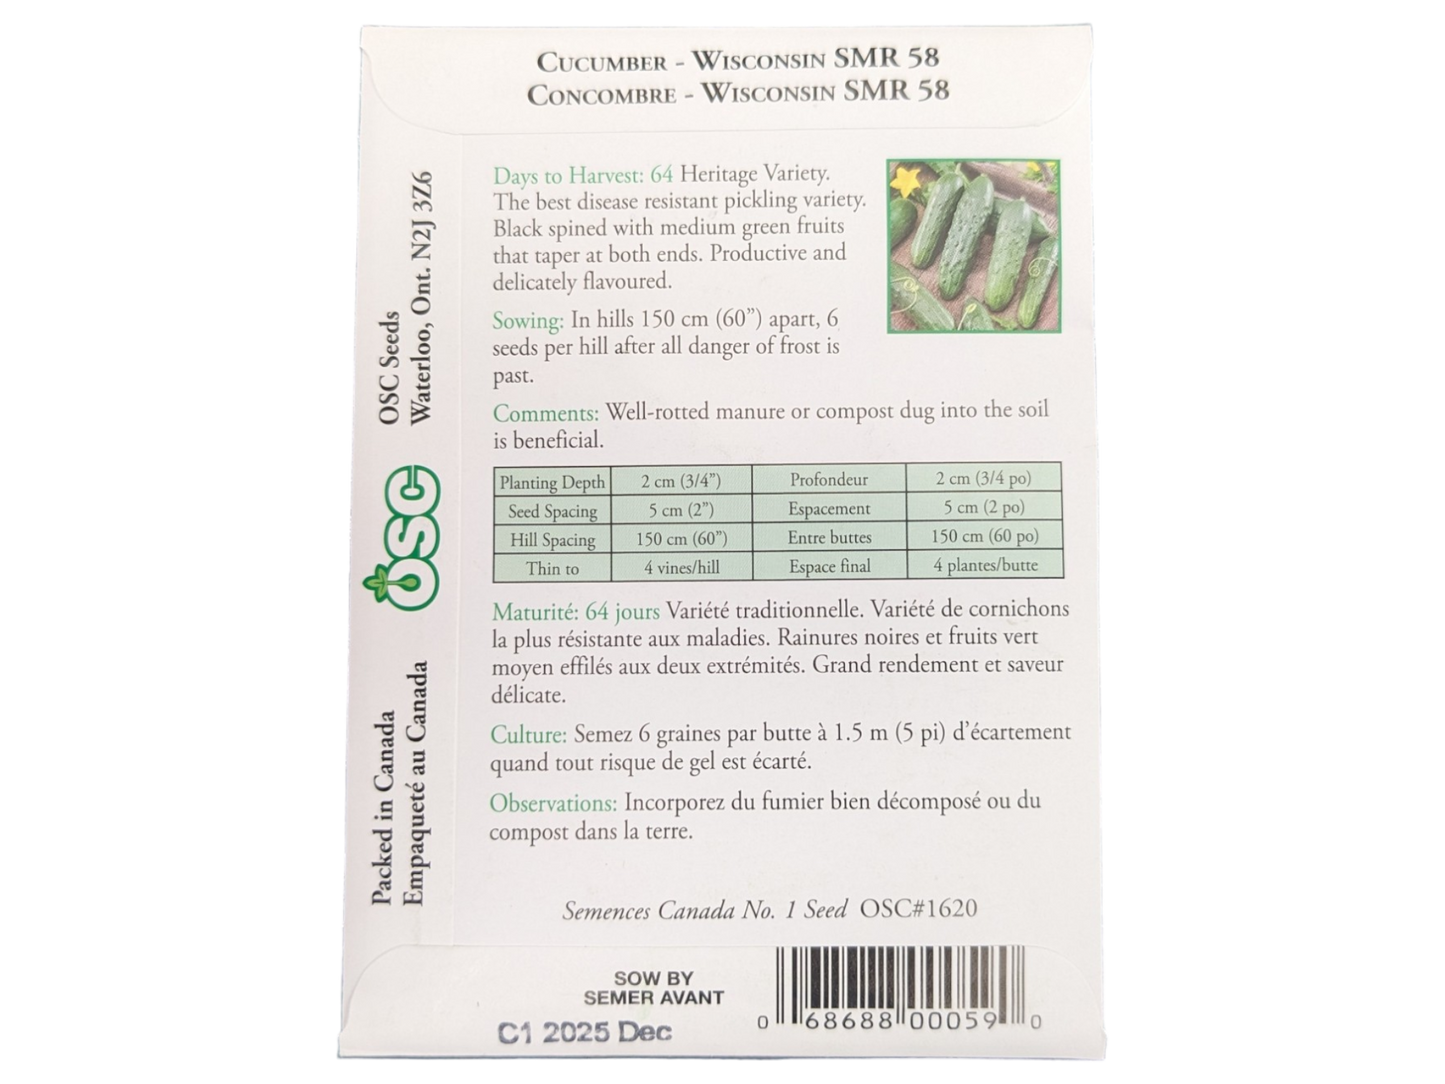 Cucumber Wisconsin SMR 58